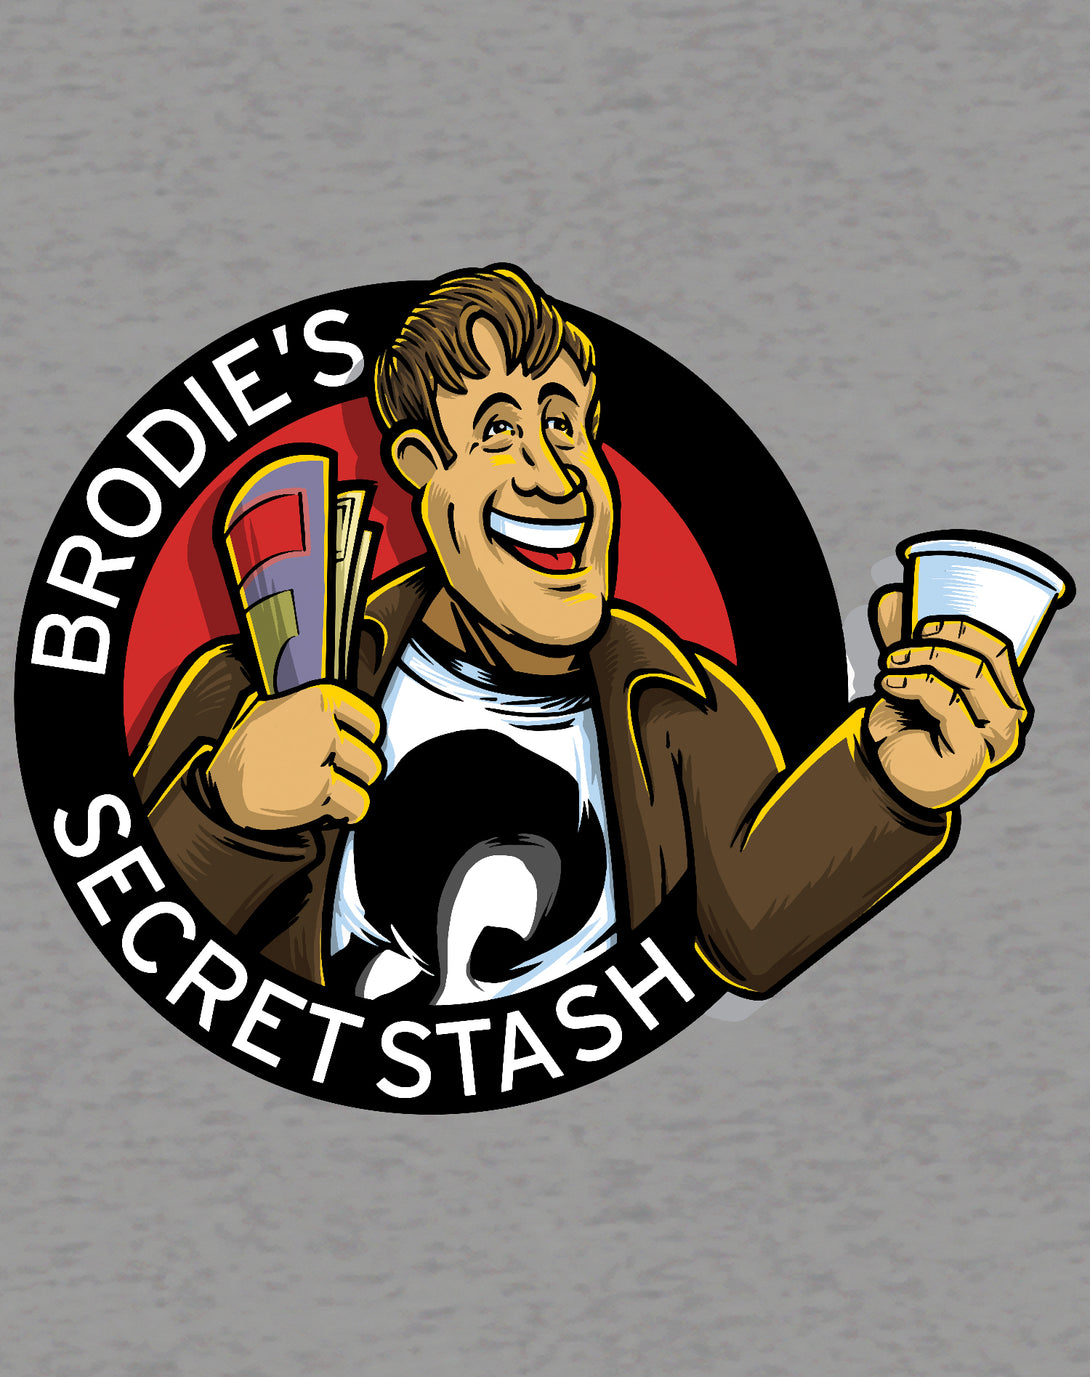 Kevin Smith Jay & Silent Bob Reboot Brodie's Secret Stash Comic Book Store Logo Official Men's T-Shirt Sports Grey - Urban Species Design Close Up